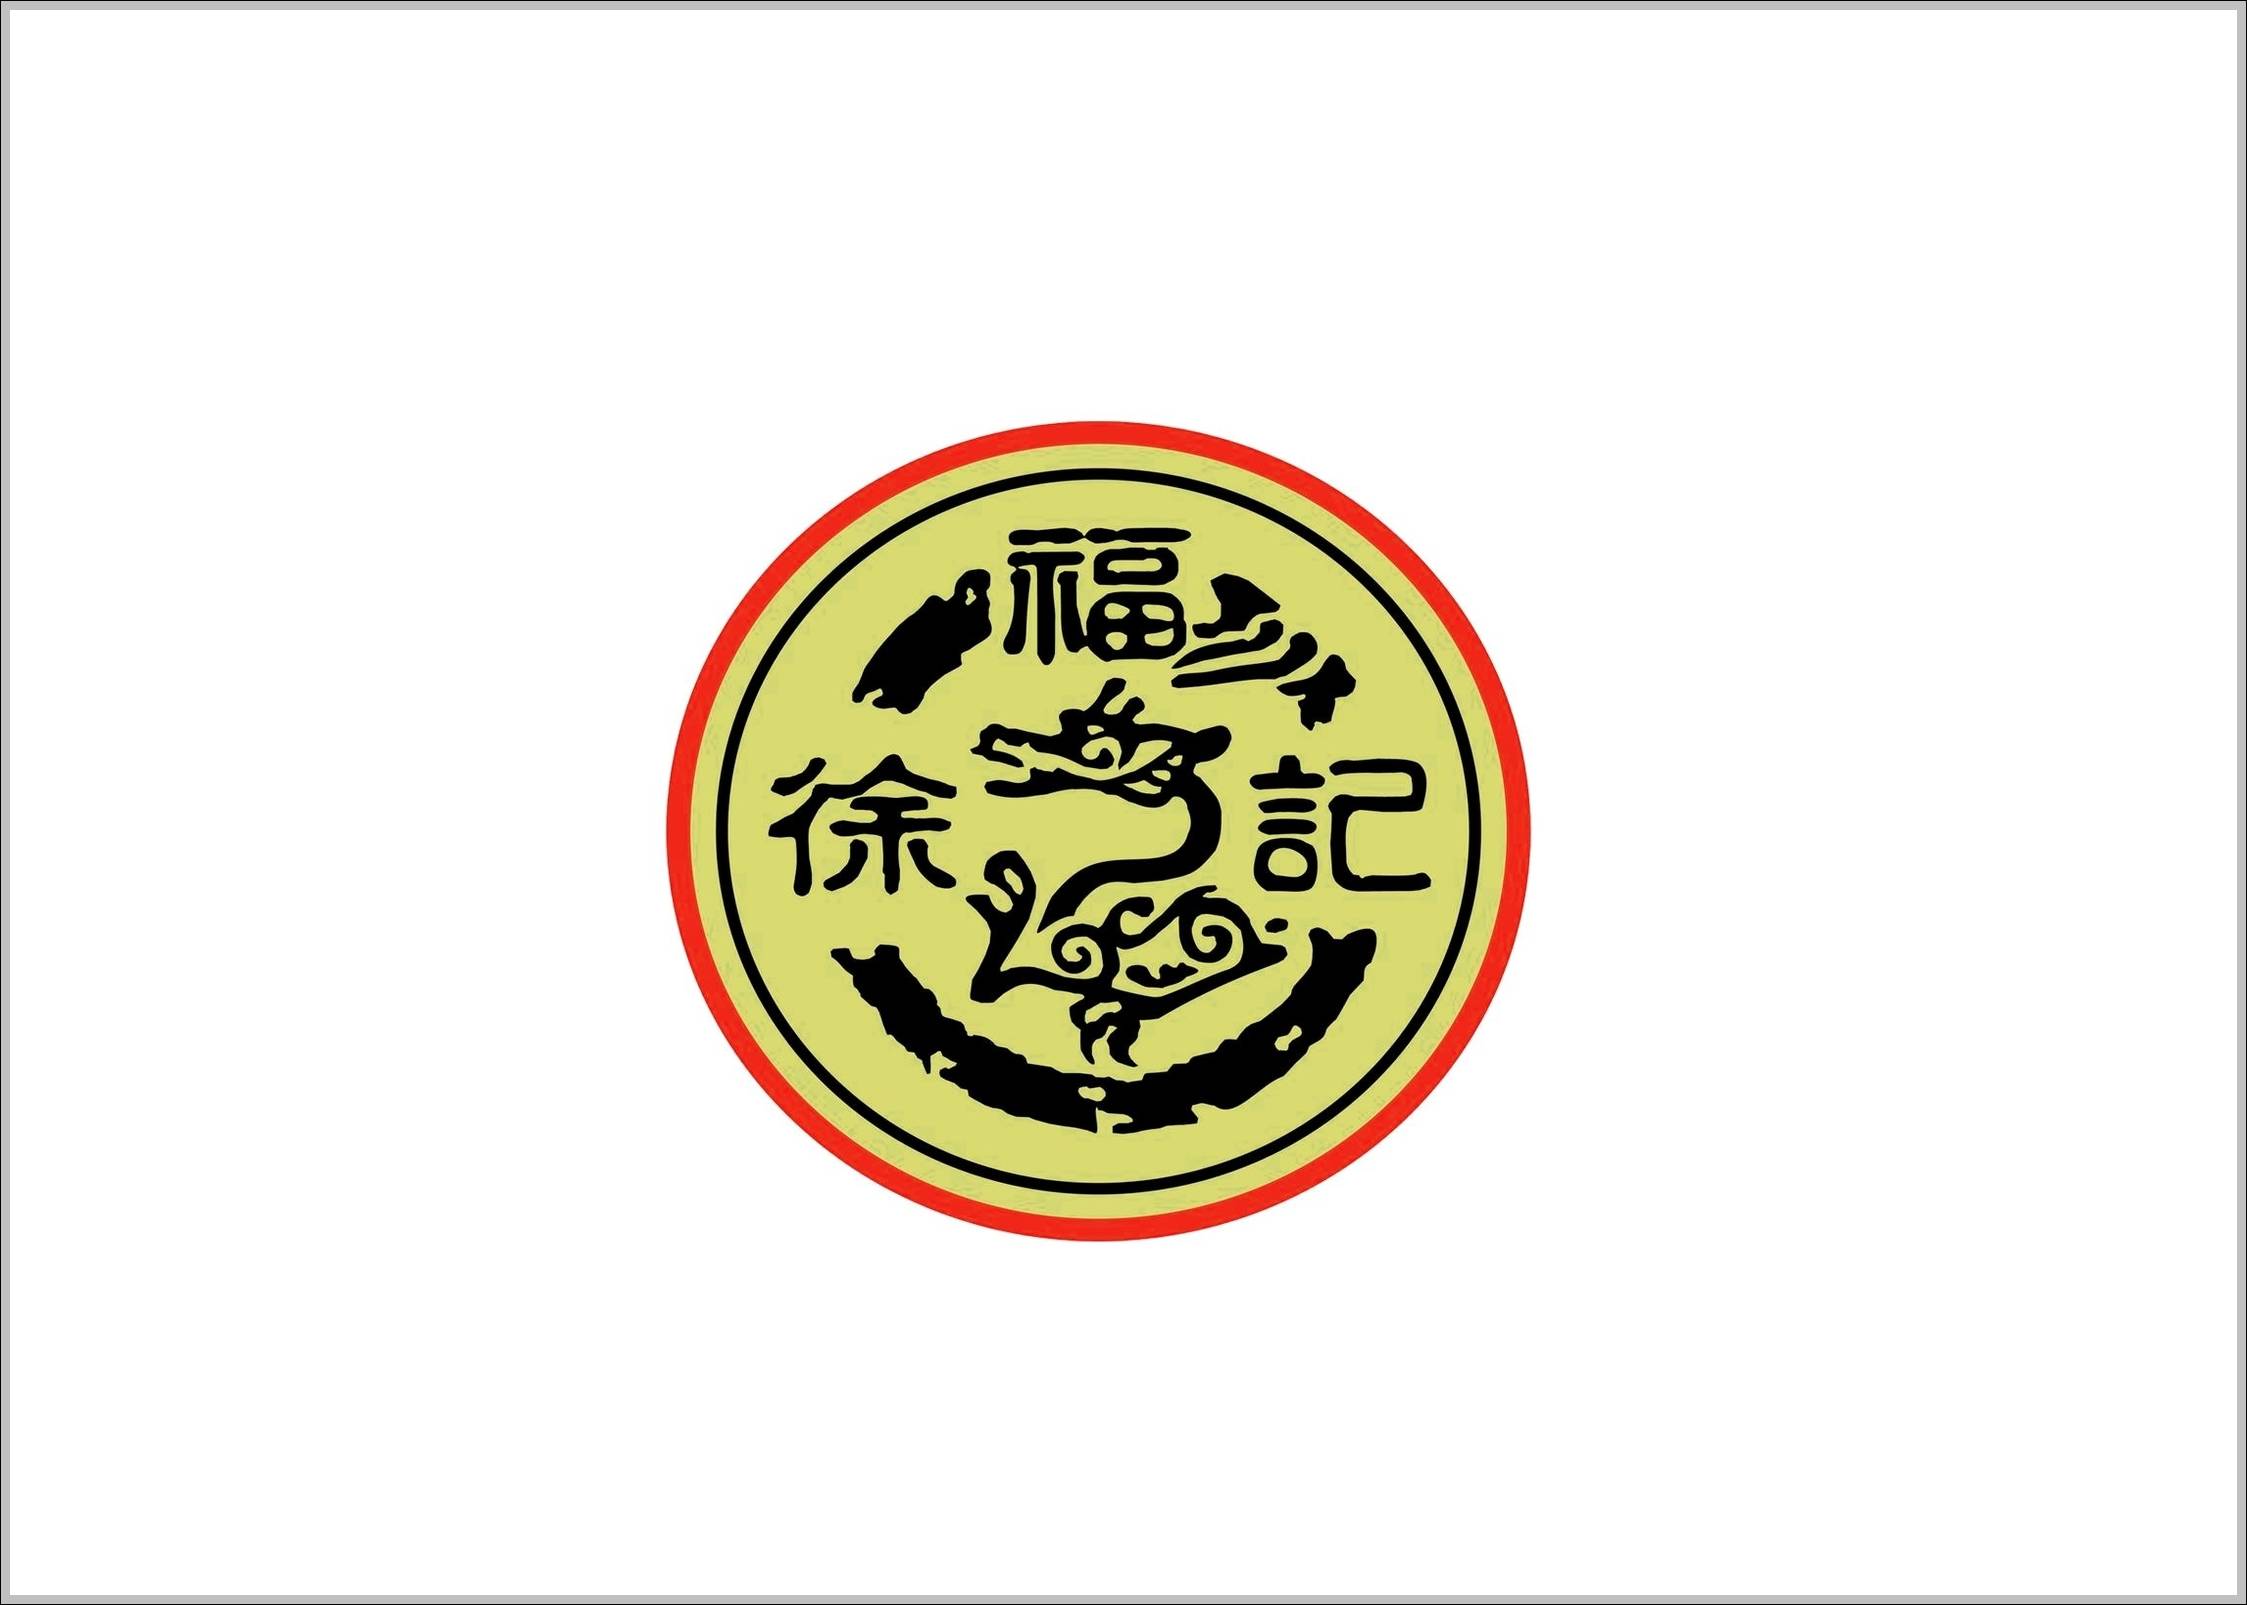 Hsu Logo - Hsu Fu Chi logo. Logo Sign, Signs, Symbols, Trademarks